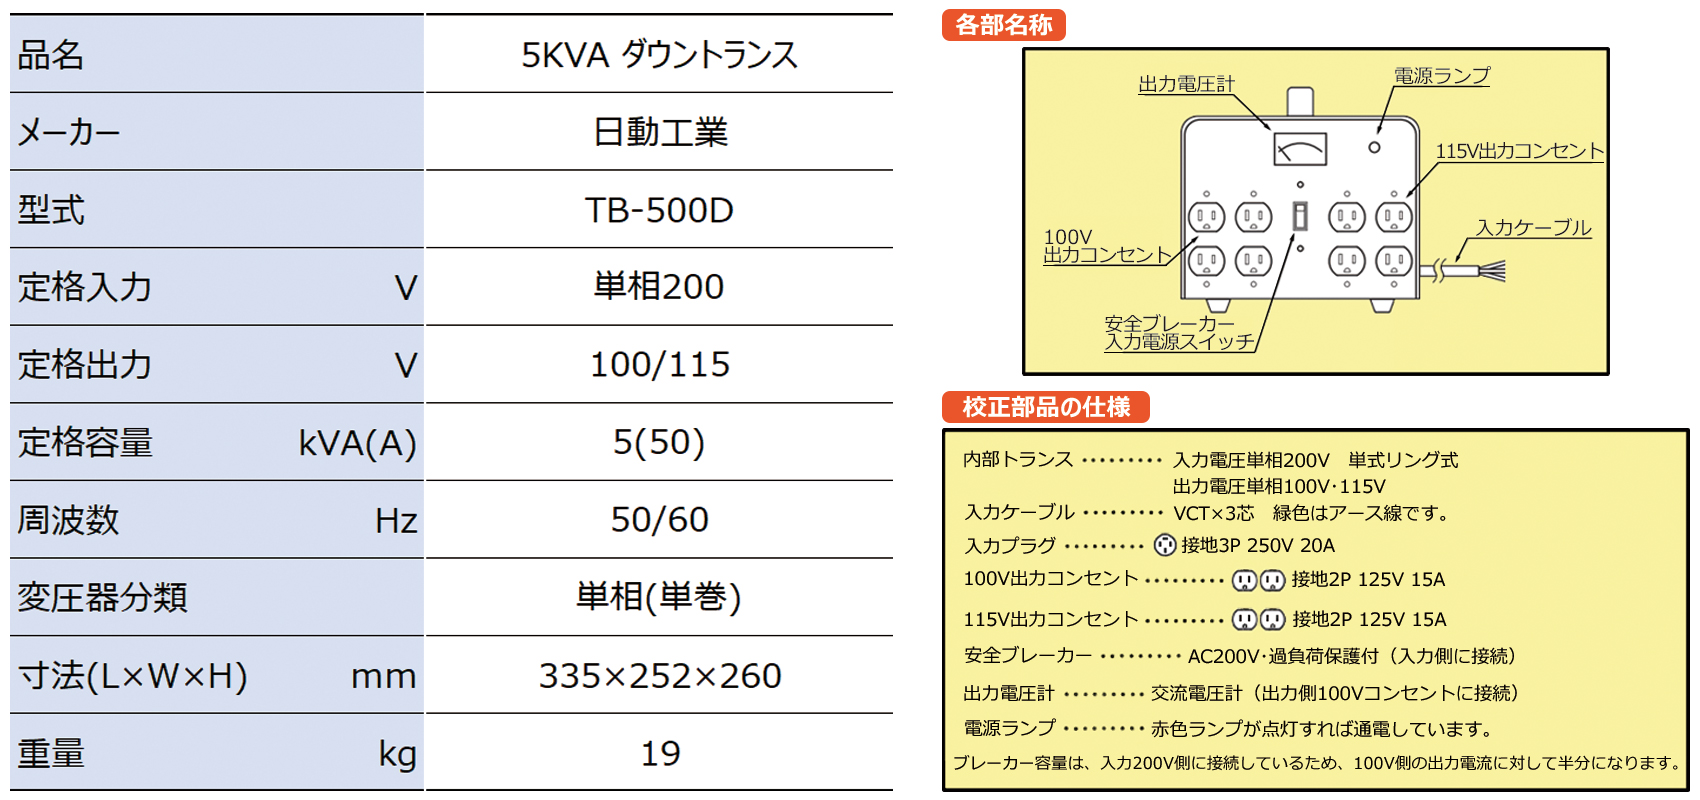 5KVA ダウントランス レンタル新製品情報